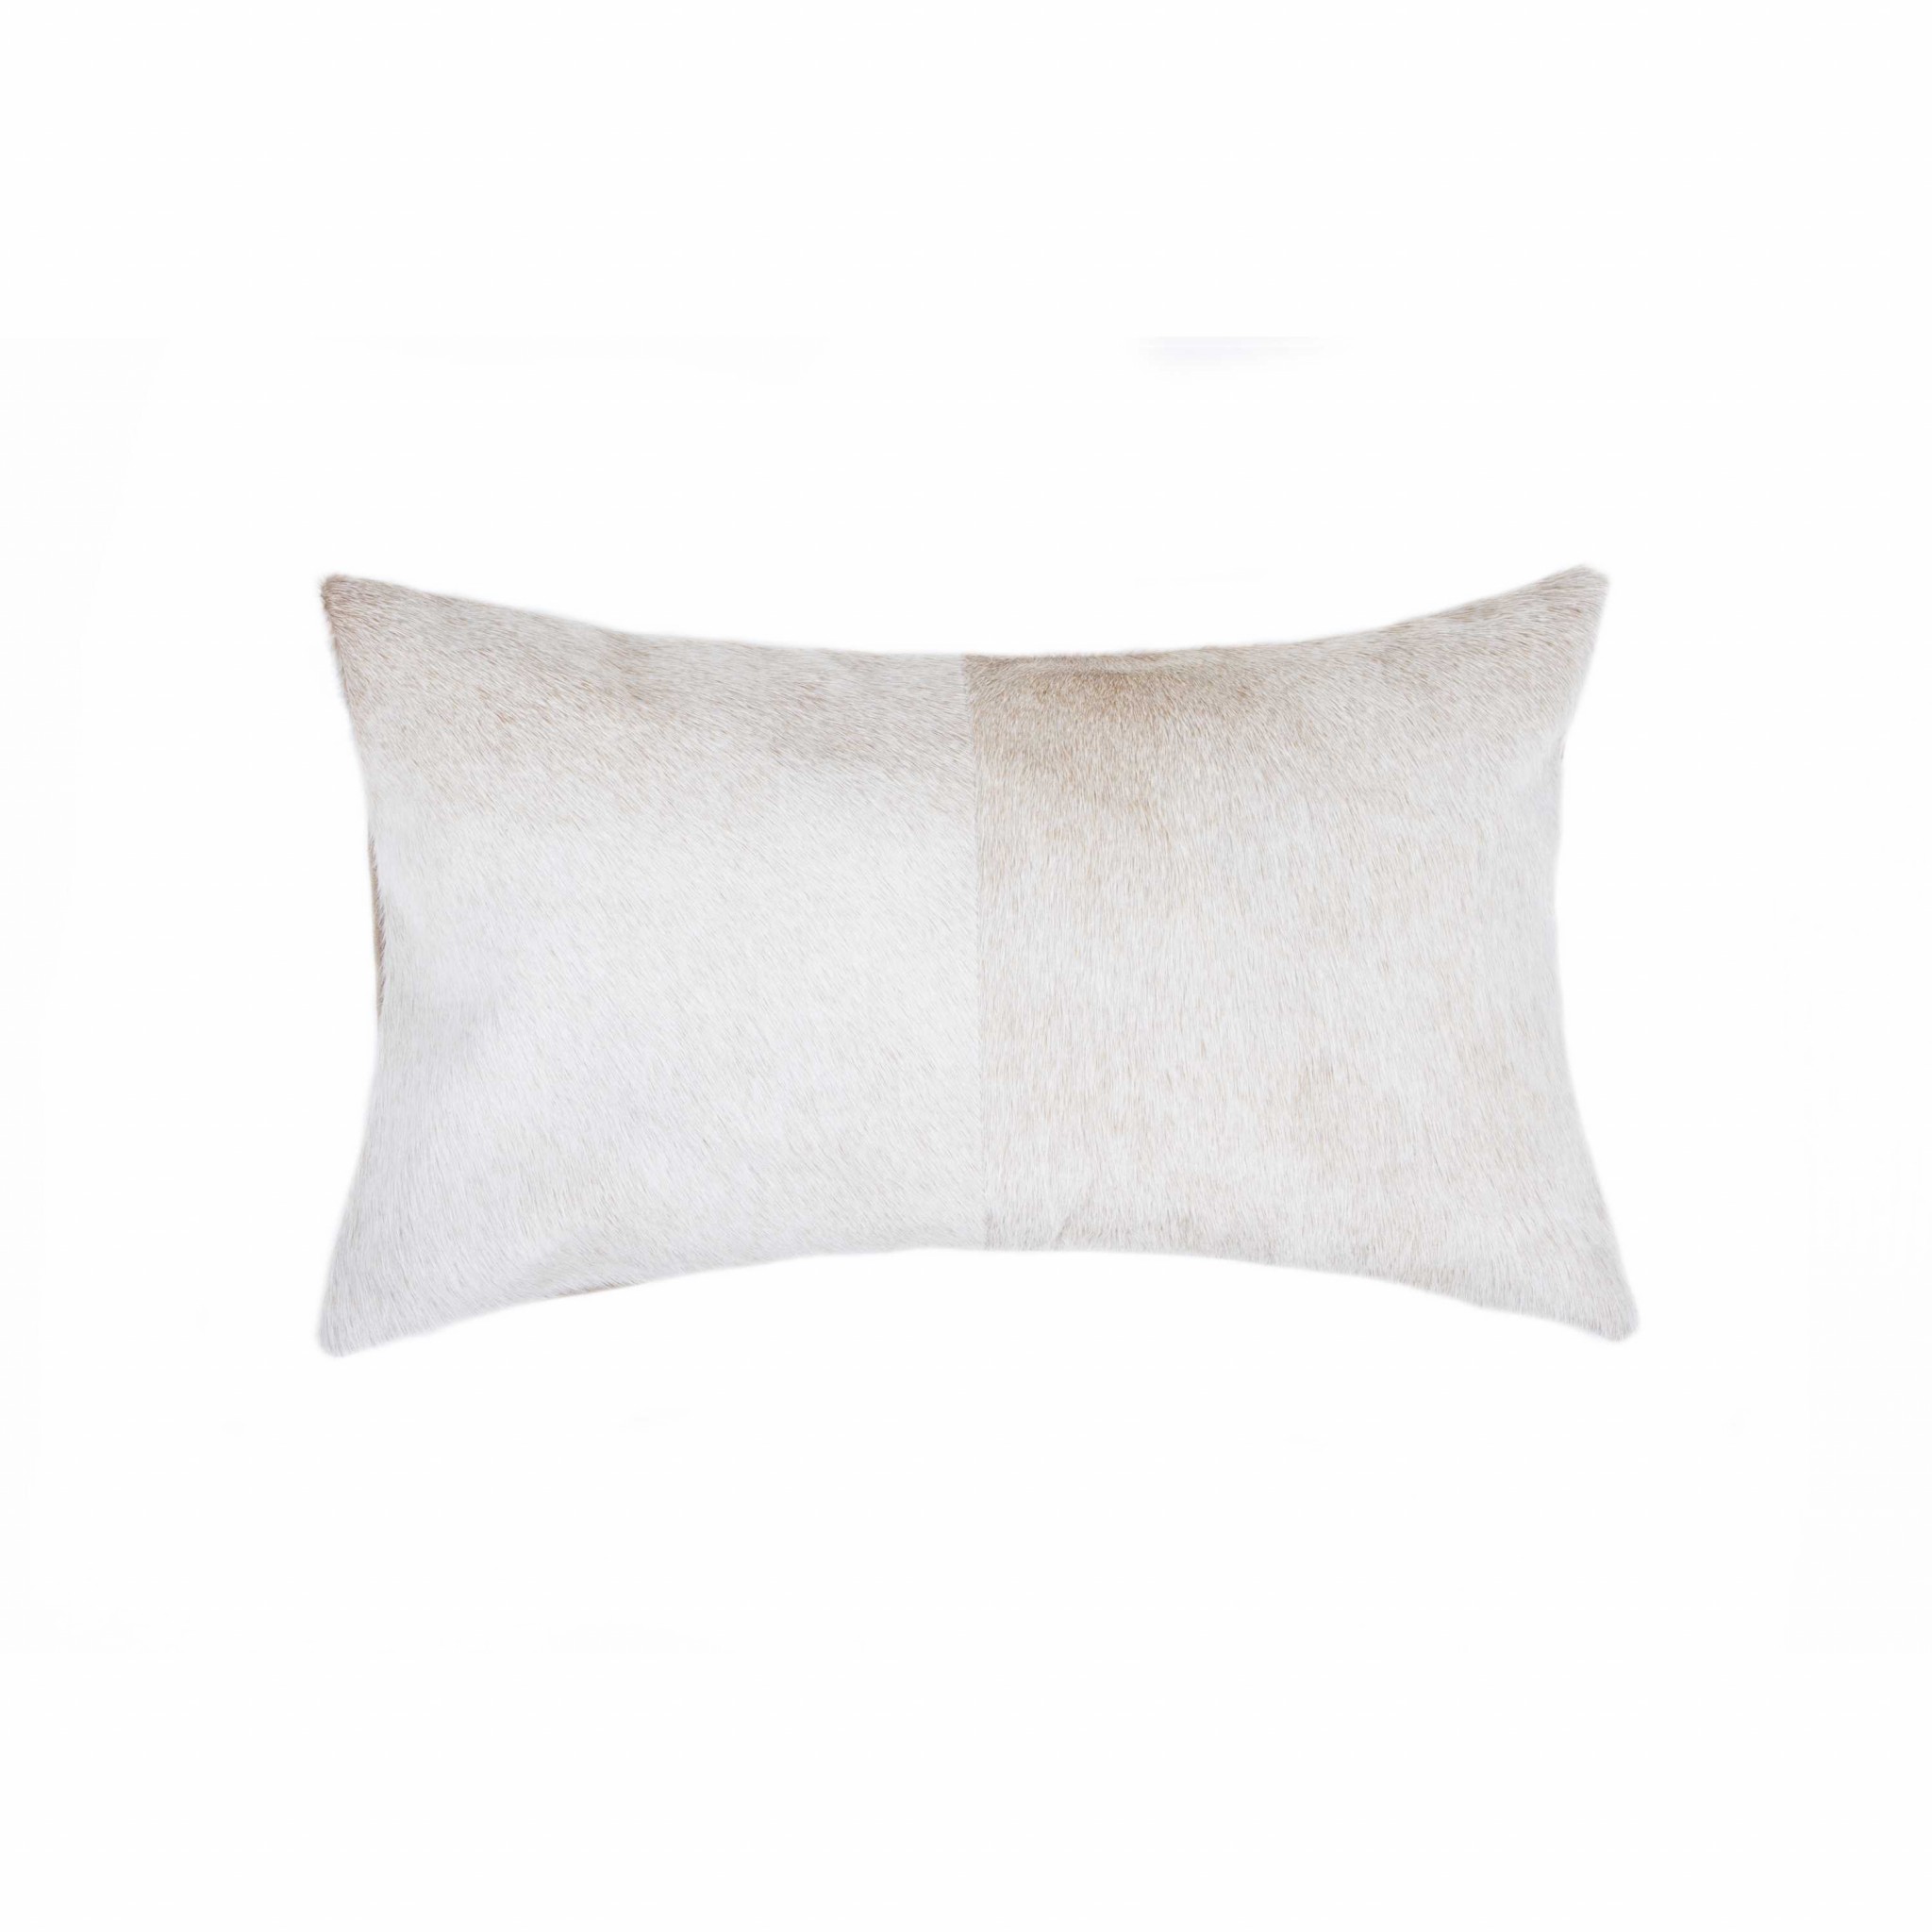 12" x 20" x 5" Natural Cowhide - Pillow